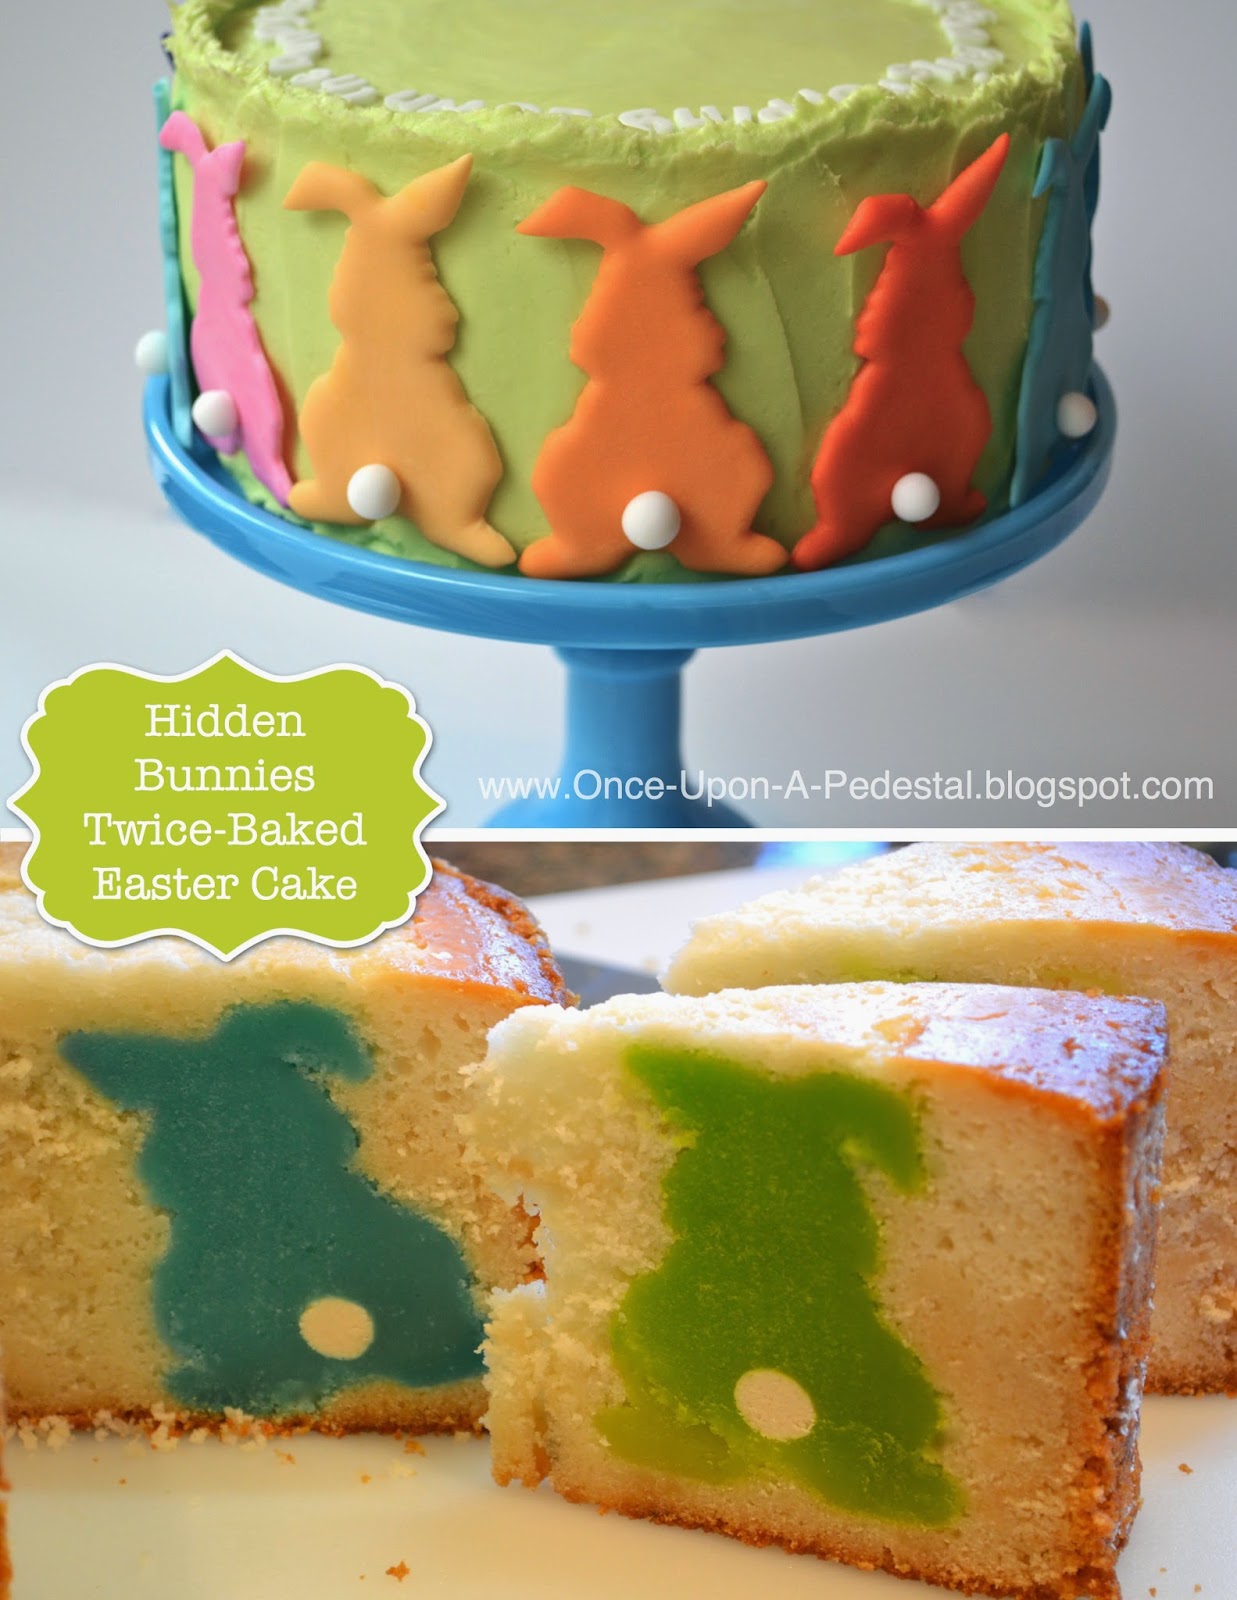 rainbow-polka-dot-suprise-inside-cake-spotty-free-tutorial-deborah-stauch